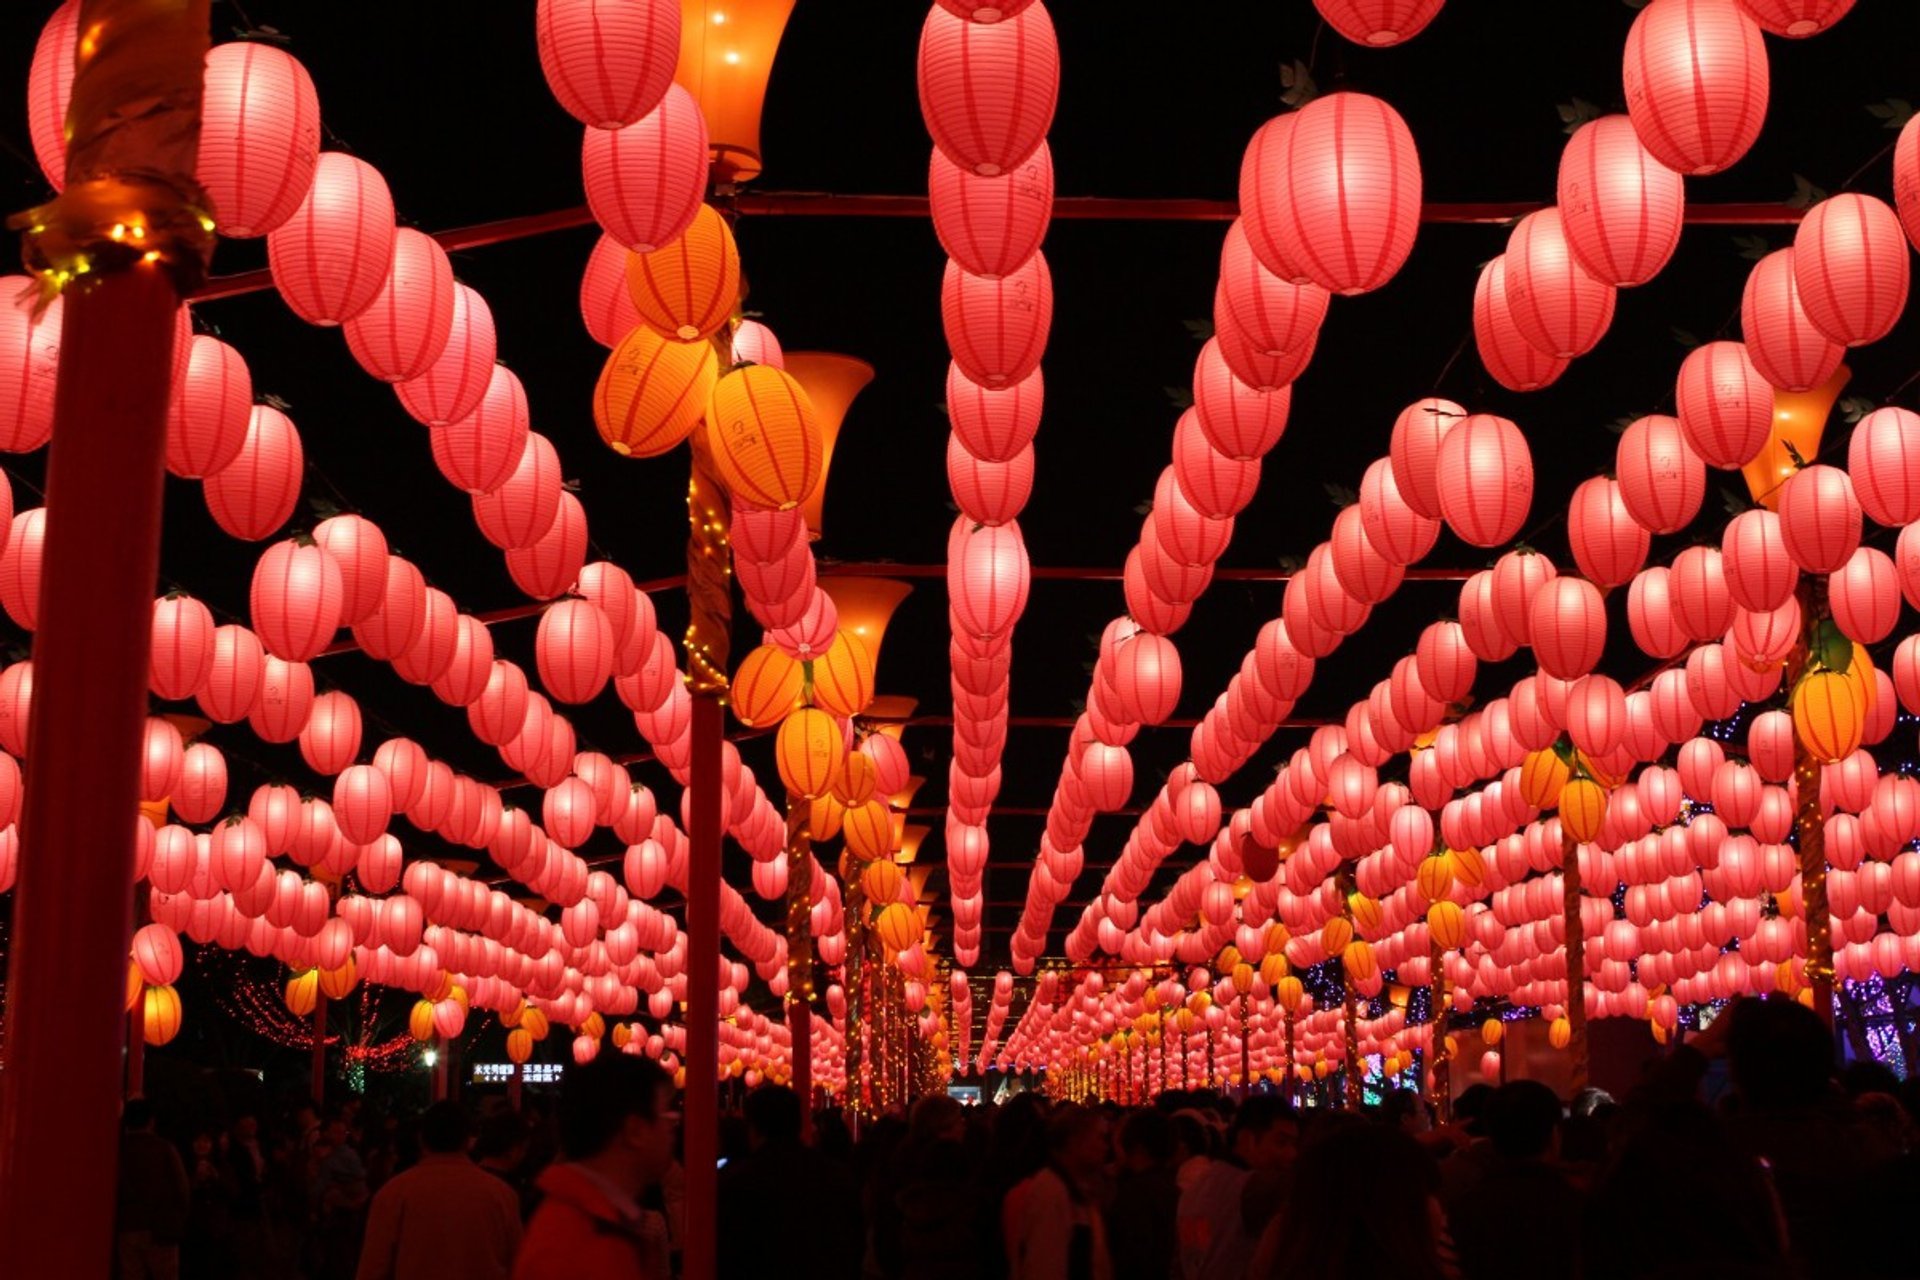 Lantern Festival 2020 in China Dates